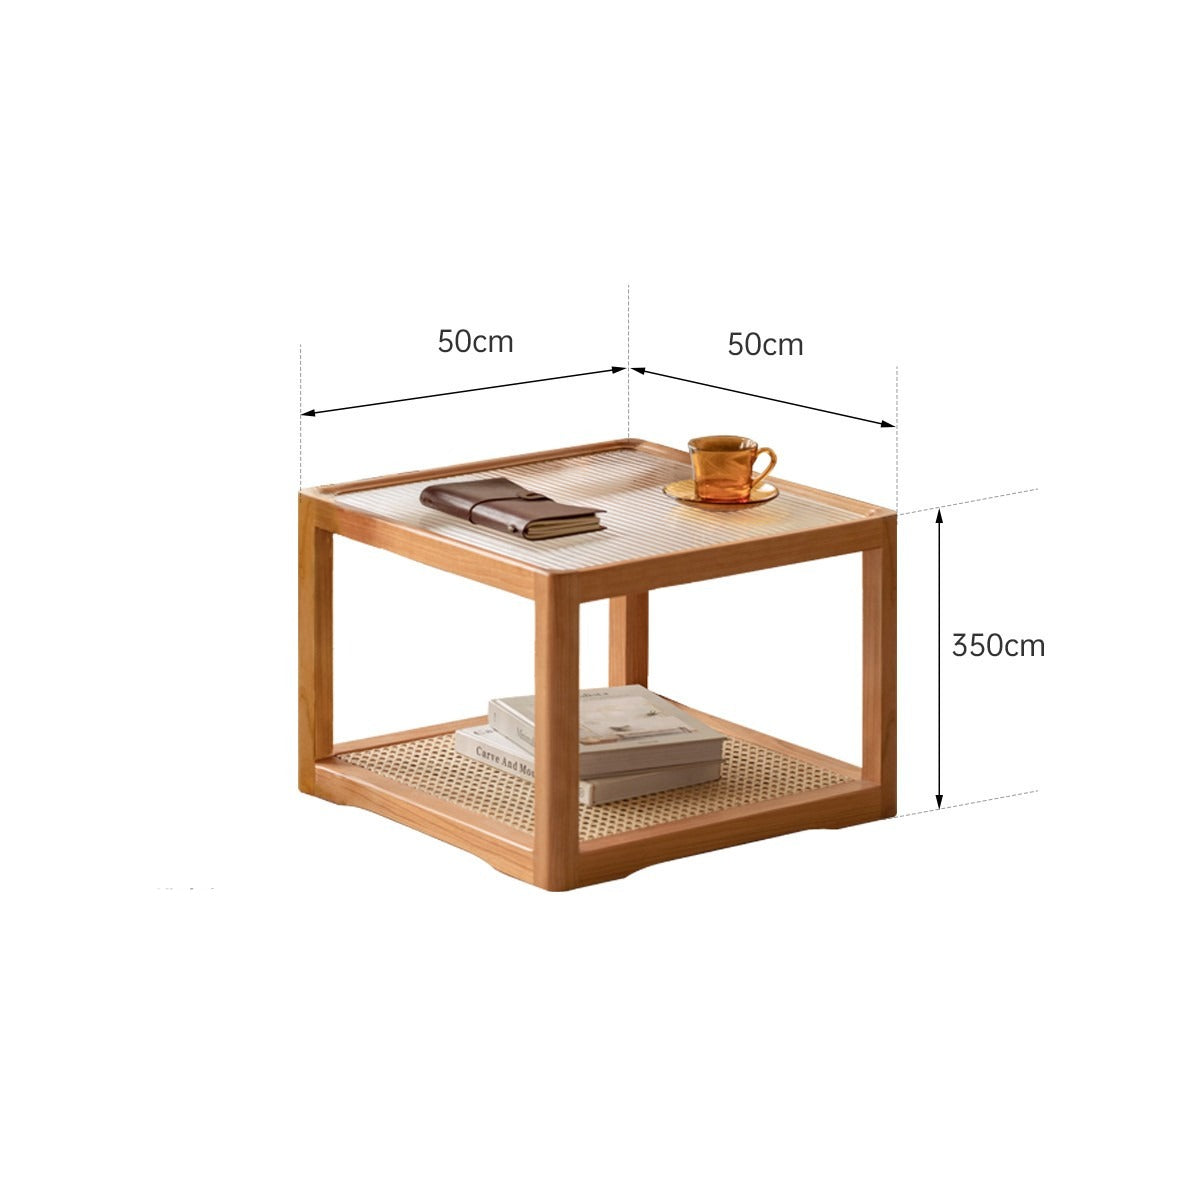 Cherry solid wood square retro rattan coffee table